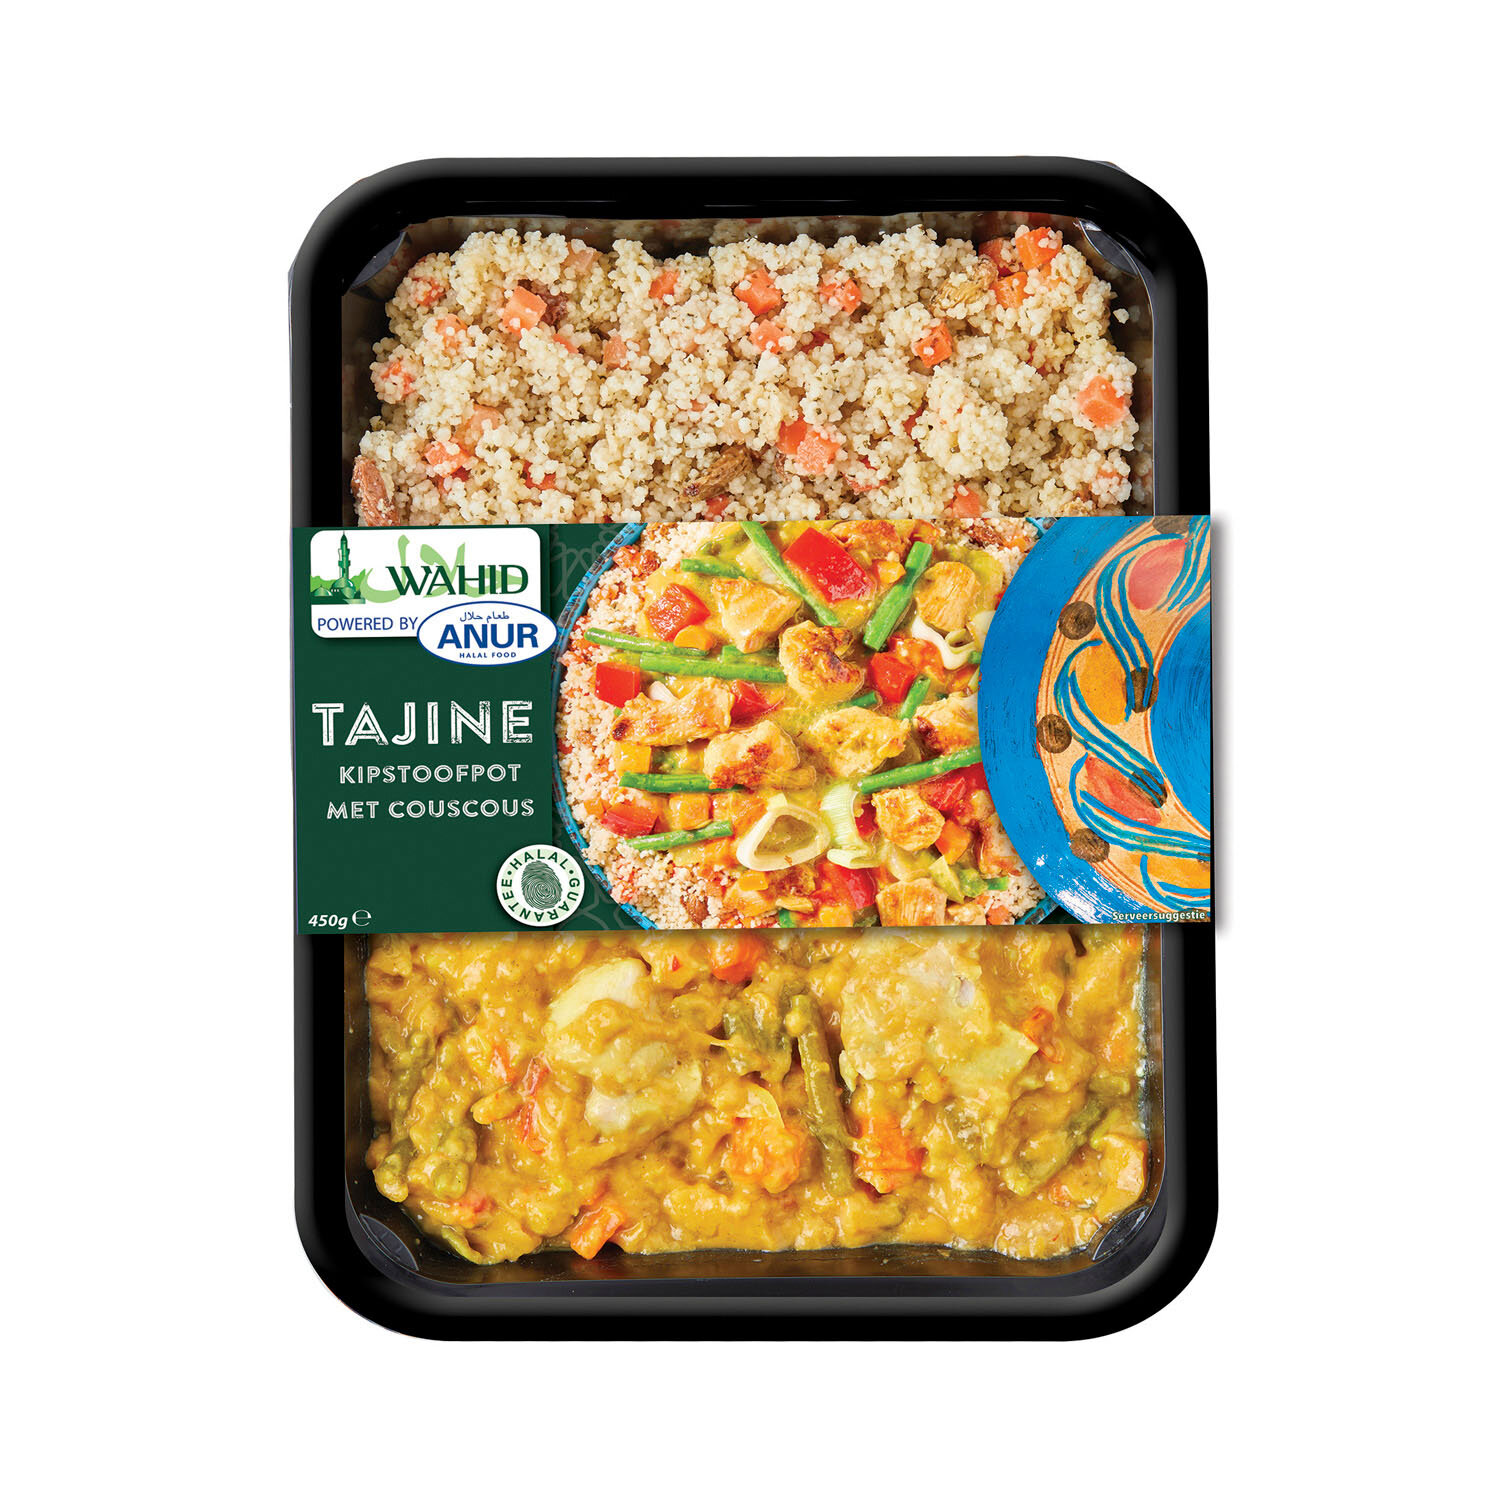 Tajine - Kipstoofpot met couscous - Wahid